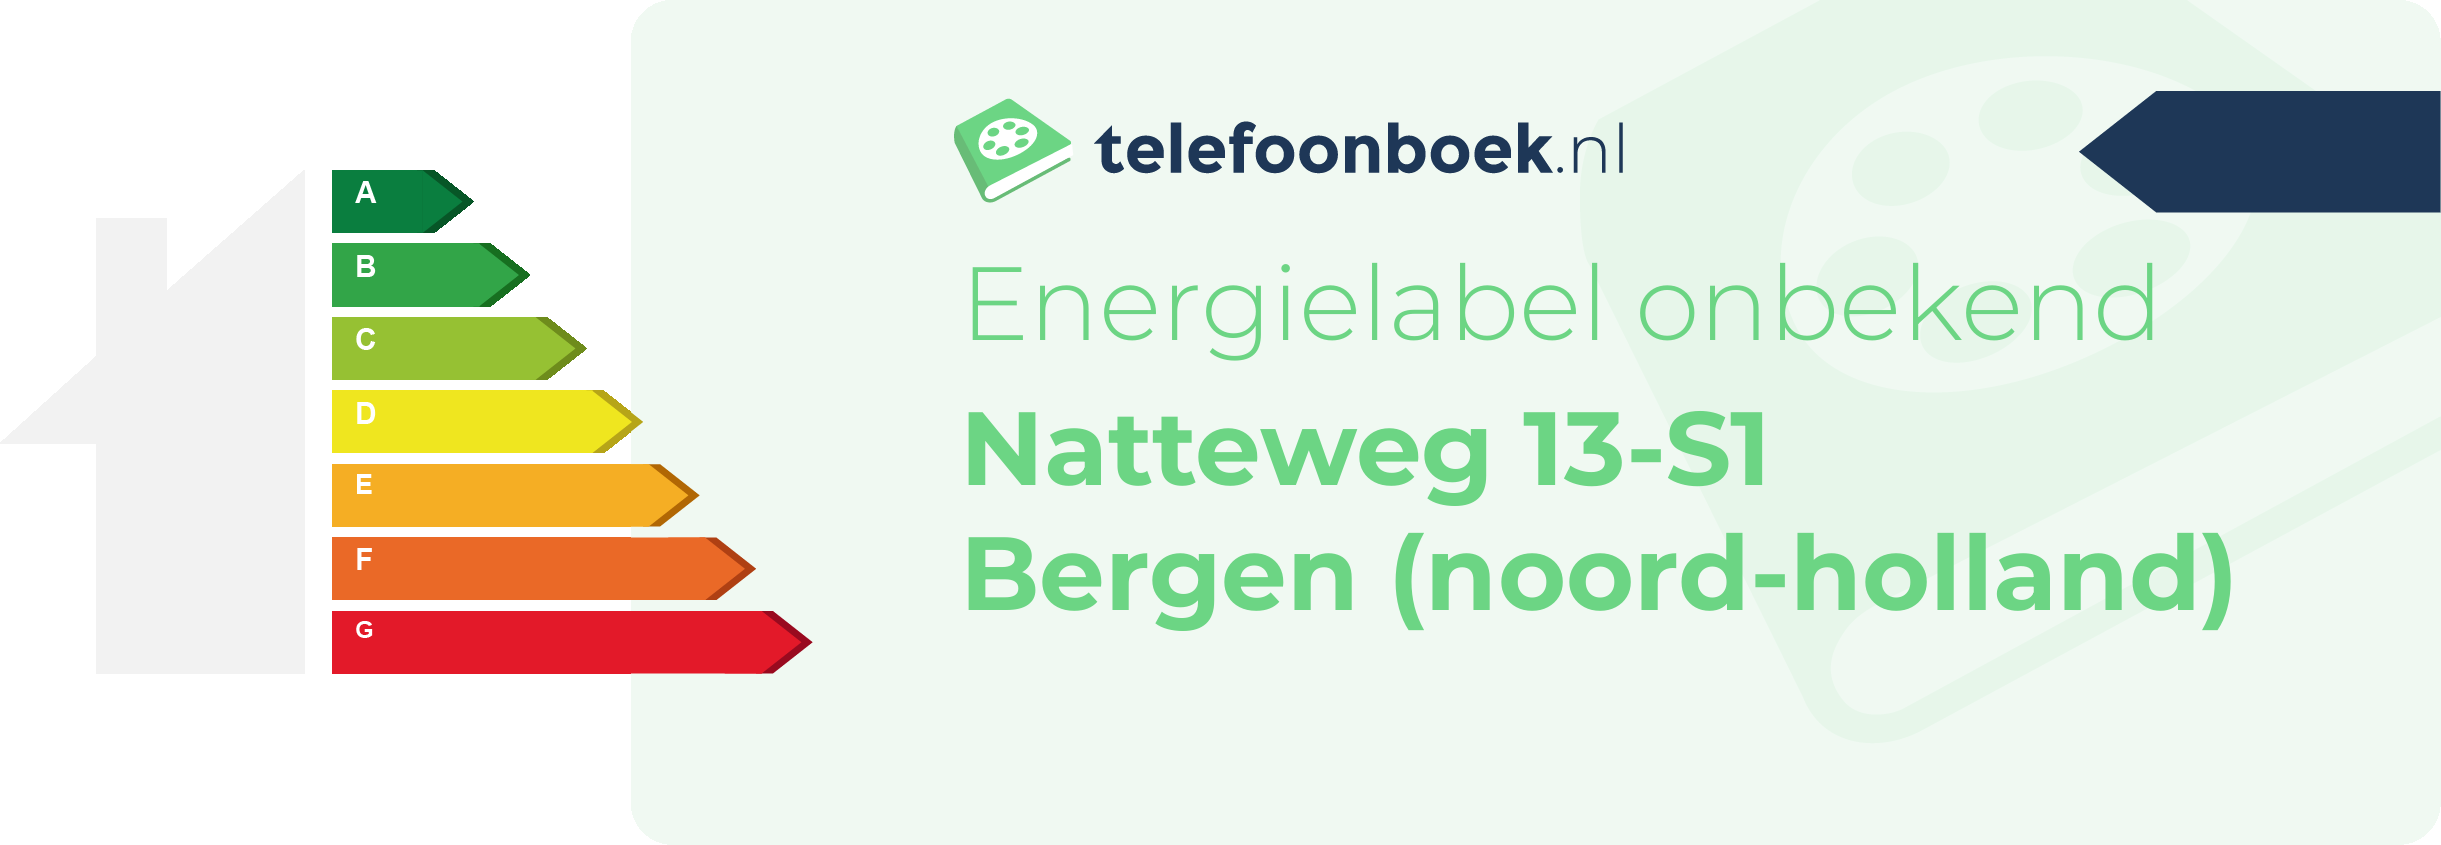 Energielabel Natteweg 13-S1 Bergen (Noord-Holland)